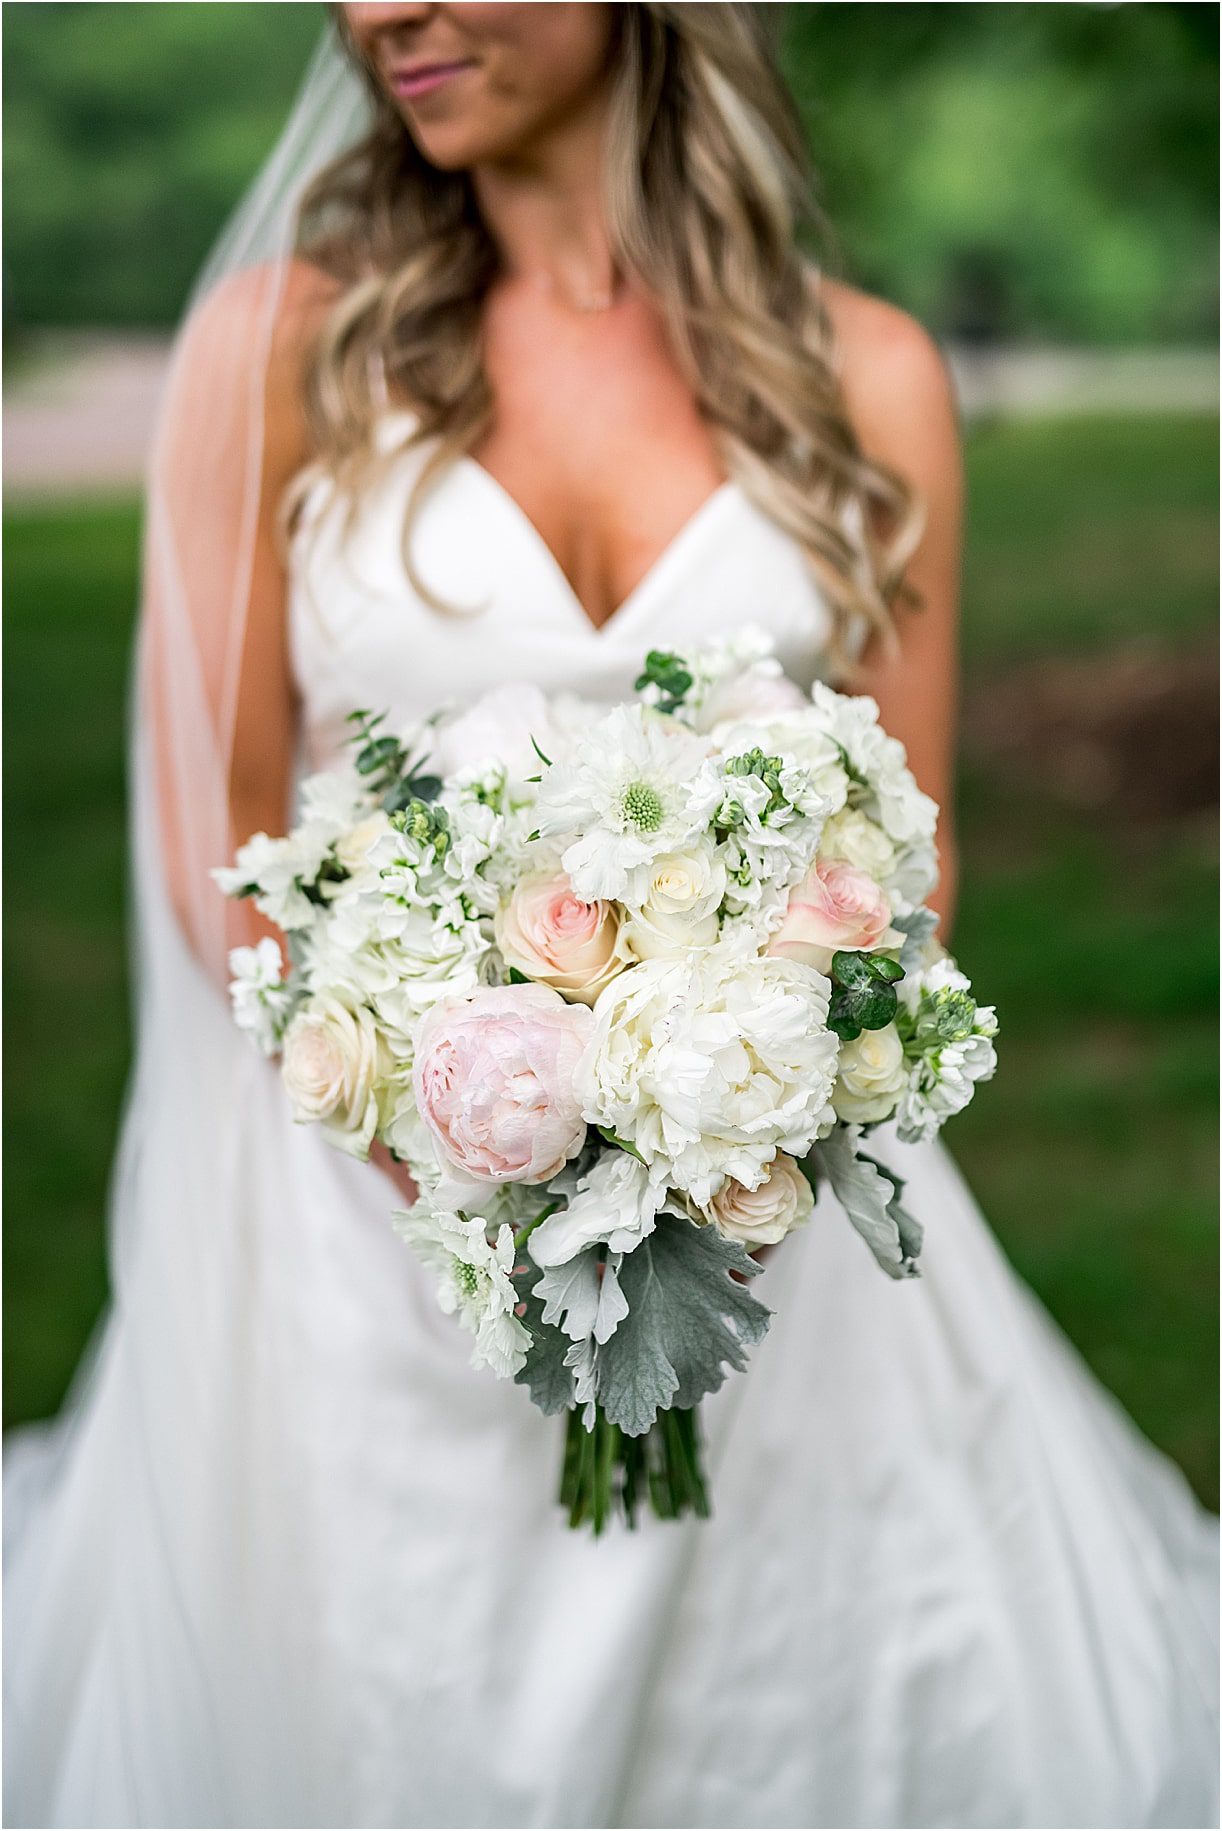 Bouquet | Drive In Wedding Ideas | COVID Wedding Ceremony Ideas | Hill City Bride Virginia Weddings